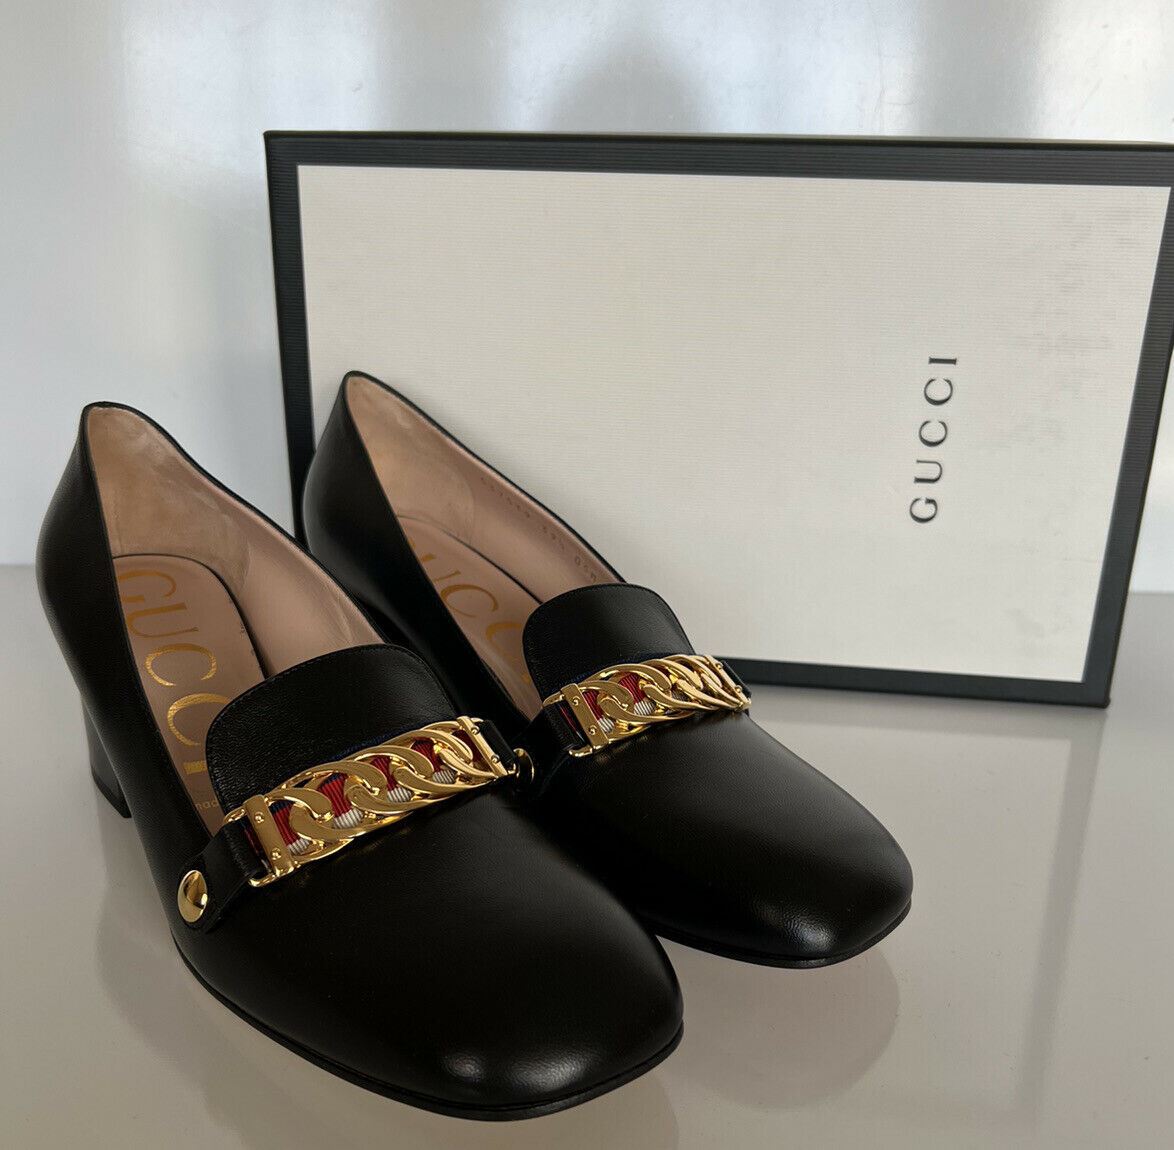 NIB $890 Gucci Malaga Pump Leather Black Shoes 9.5 US (39.5 Euro) Italy 537539